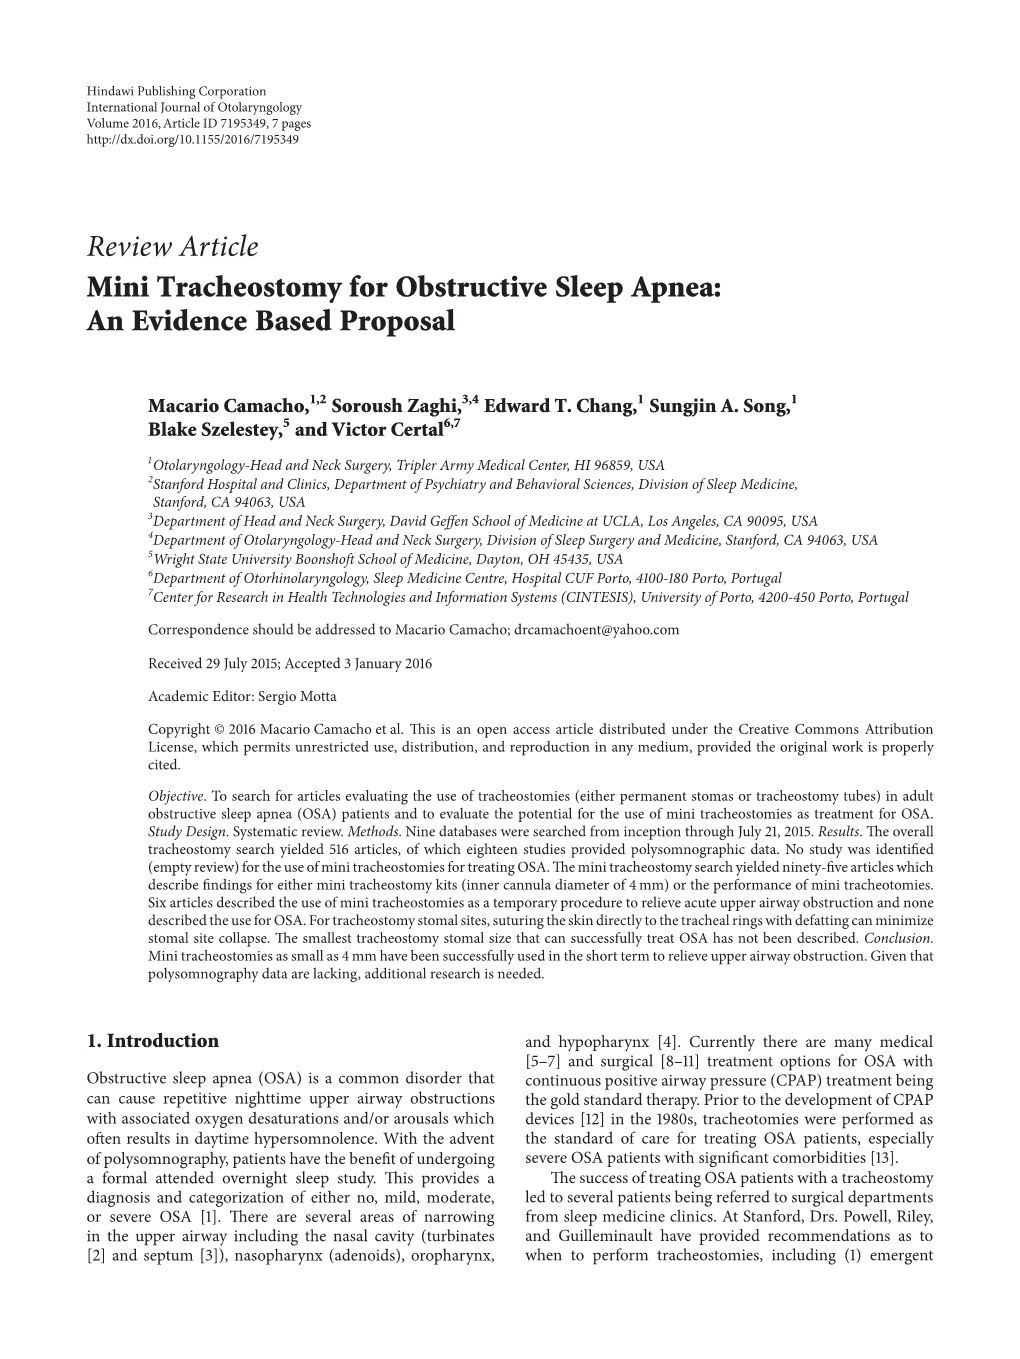 Review Article Mini Tracheostomy for Obstructive Sleep Apnea: an Evidence Based Proposal